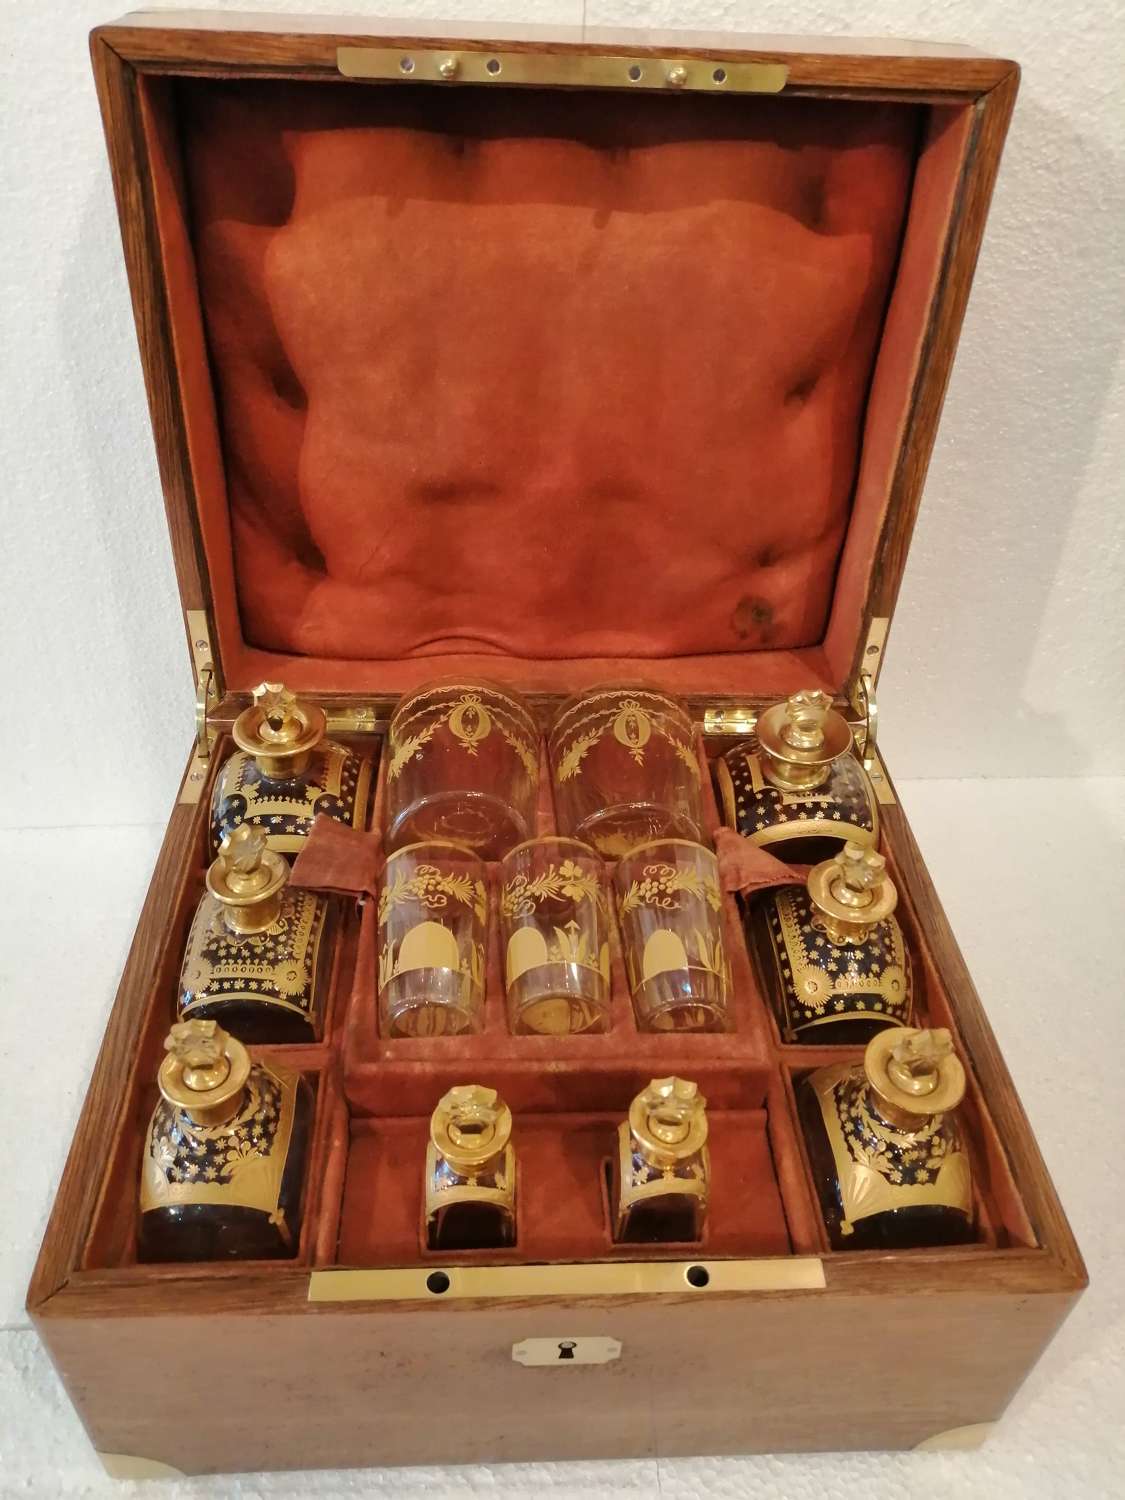 A magnificent 18th century campaign Liquor chest